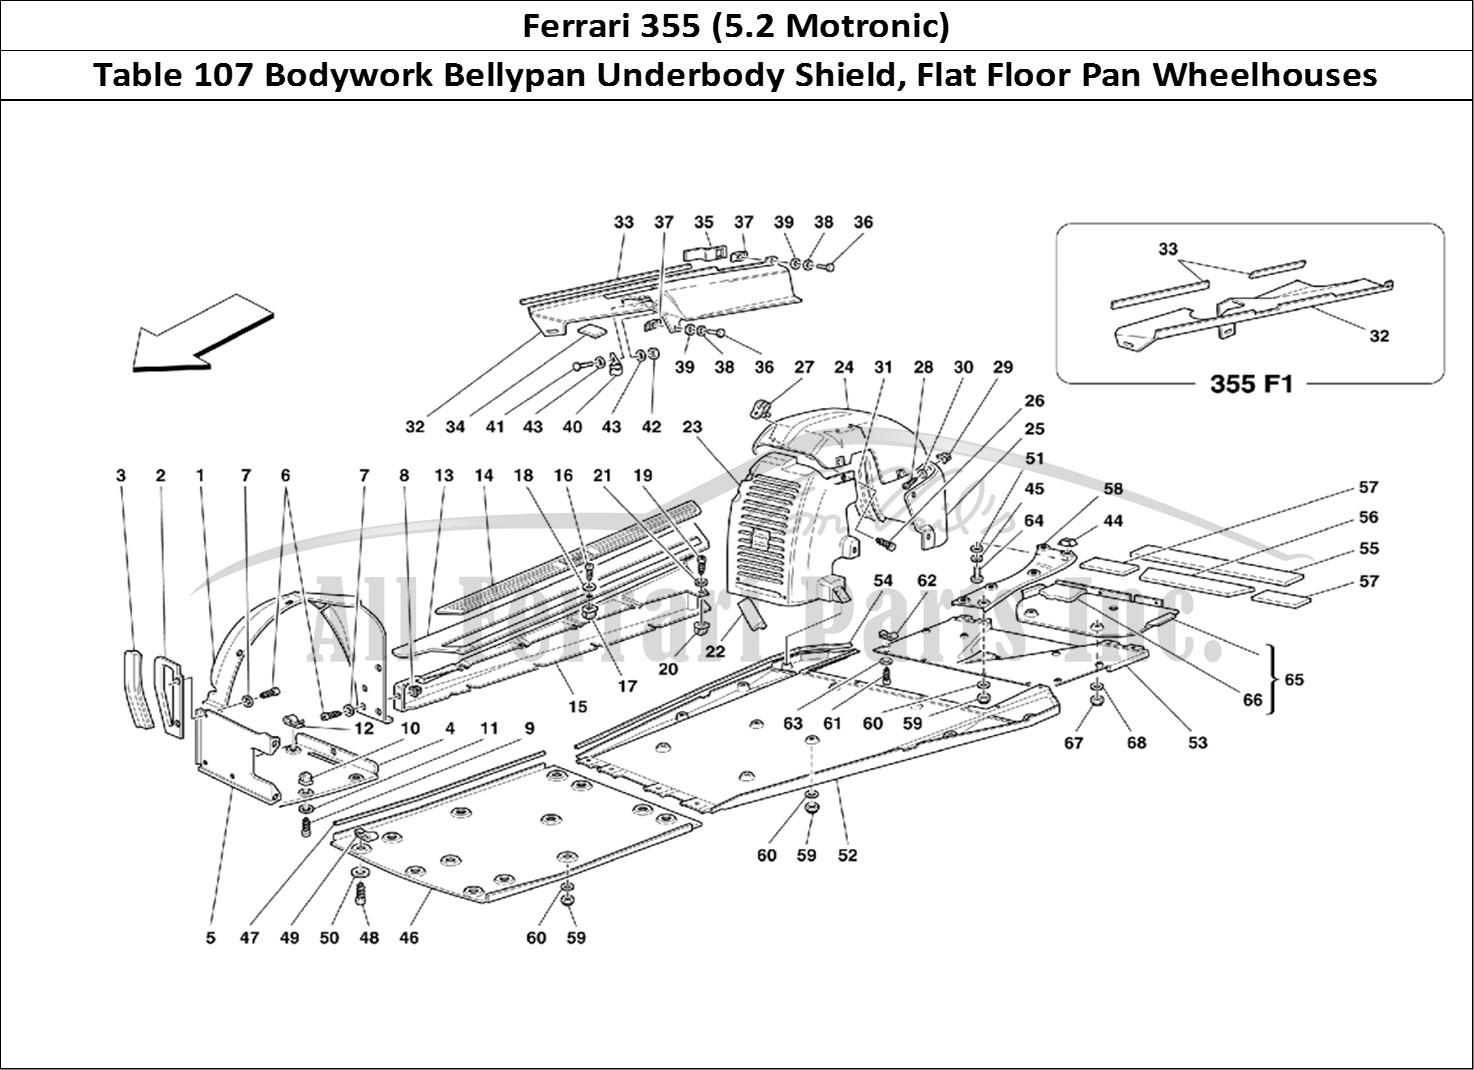 Ferrari Parts Ferrari 355 (5.2 Motronic) Page 107 Body - Shield and Wheelho